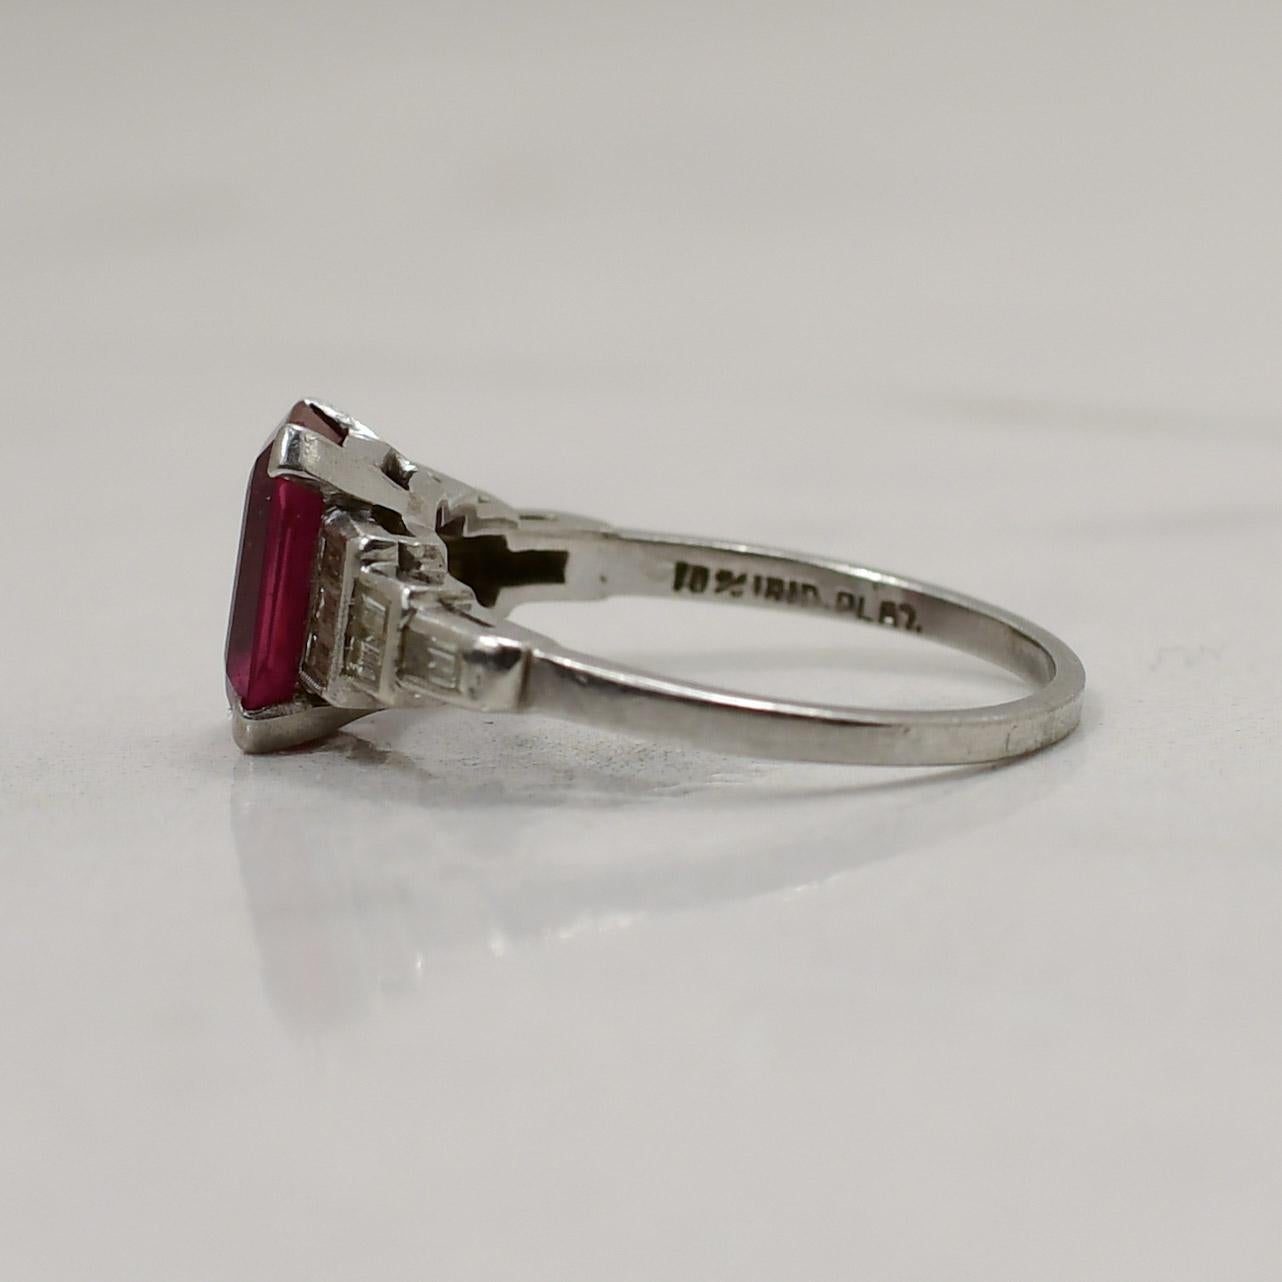 Women's Art Deco Emerald Cut Ruby w/ Baguette Cut Diamonds Platinum Ring R-923PCF-N65